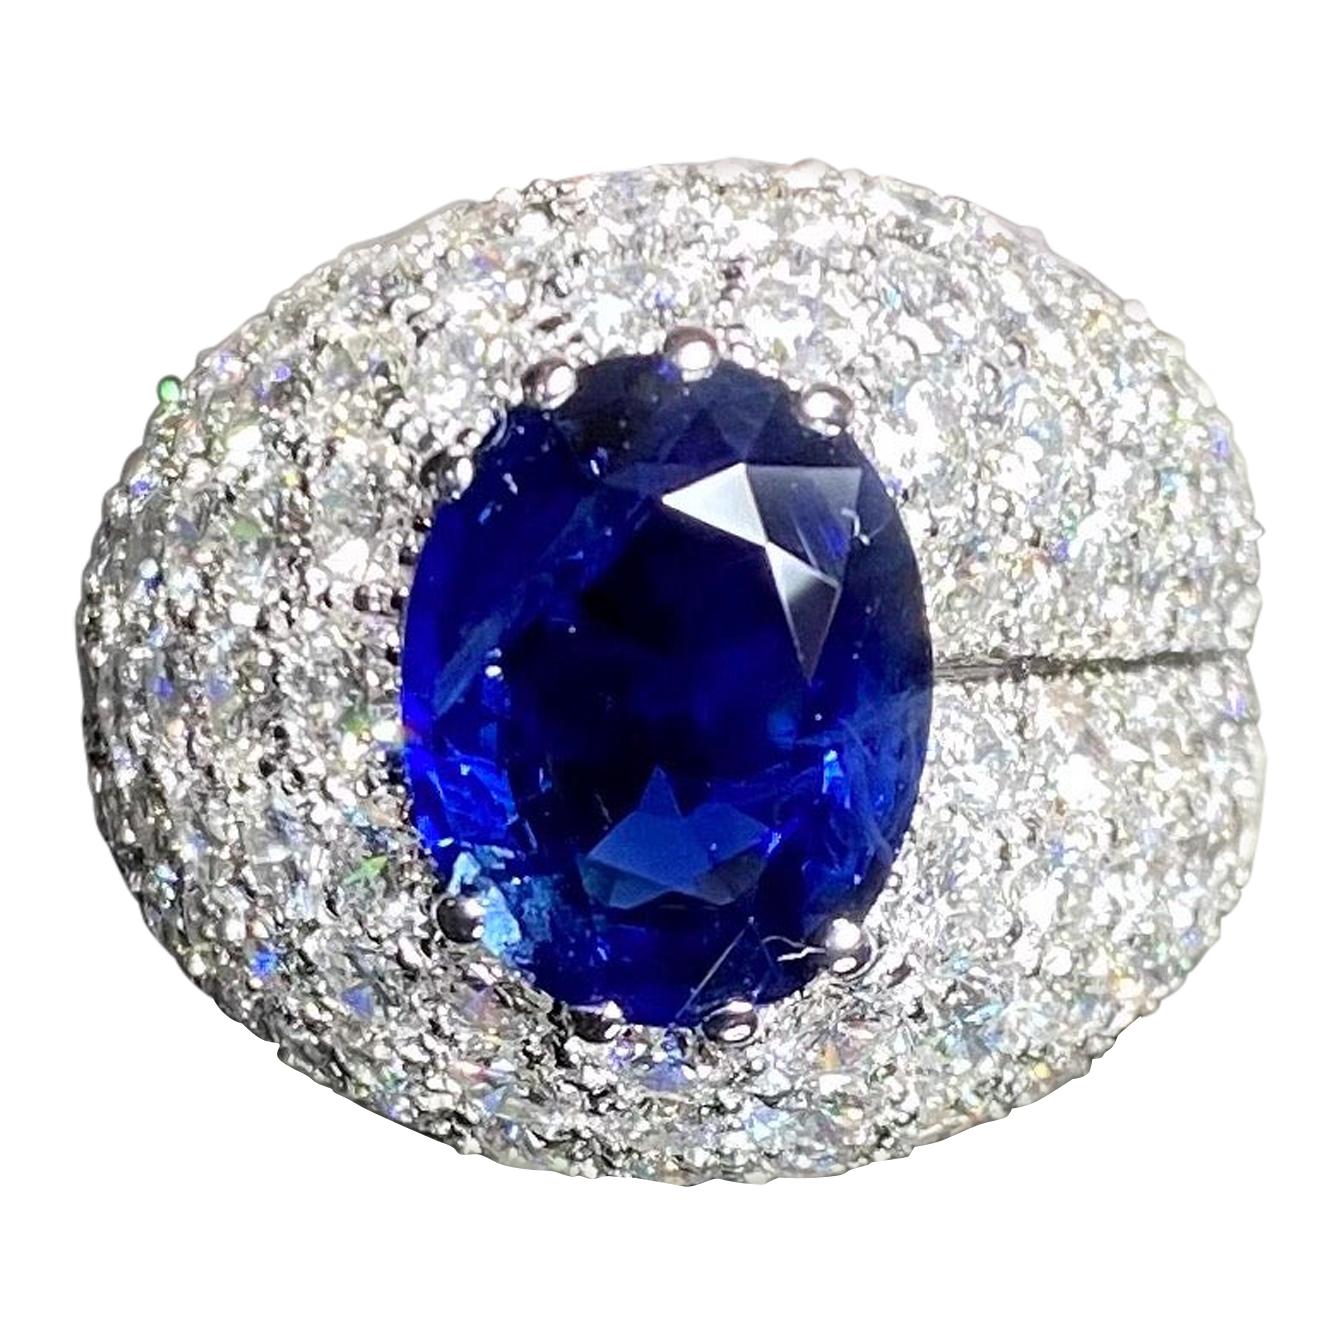 Royal Blue Ceylon Sapphire Diamond Cocktail Ring 19.2 Karat White Gold 2010s For Sale